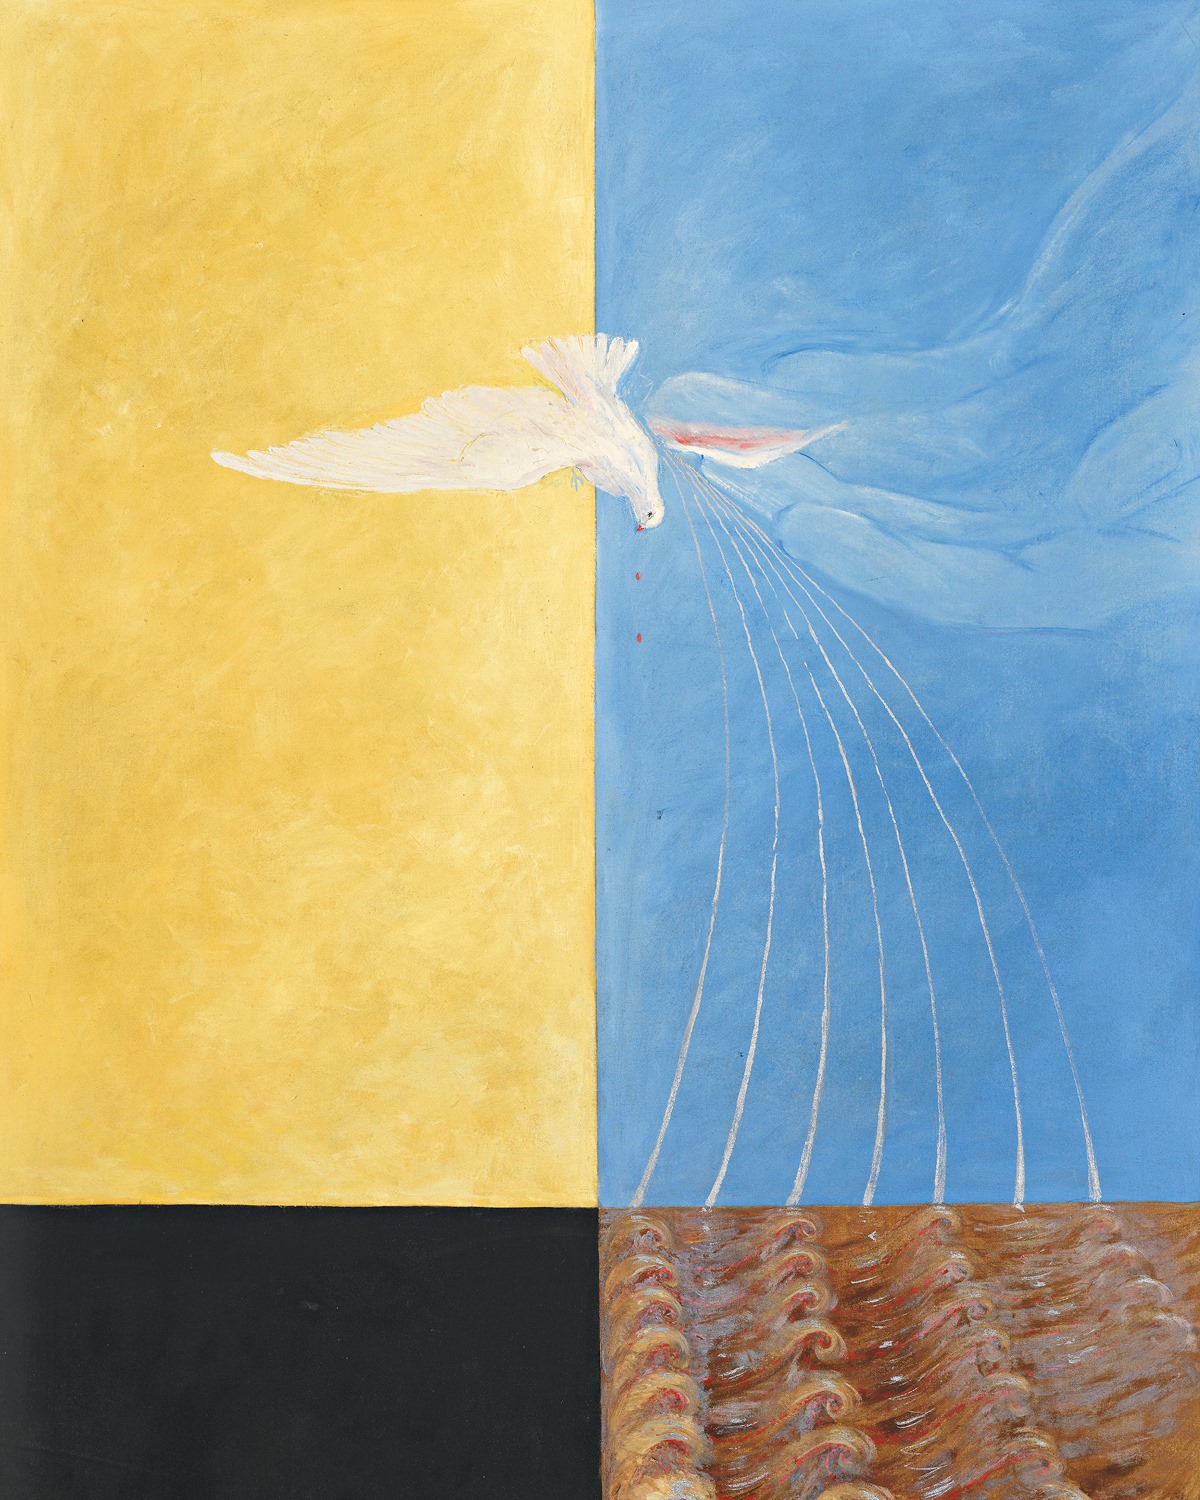 4 Numaralı Güvercin (orig. "The Dove No. 4") by Hilma af Klint - 1915 - 152 x 115.5 cm özel koleksiyon